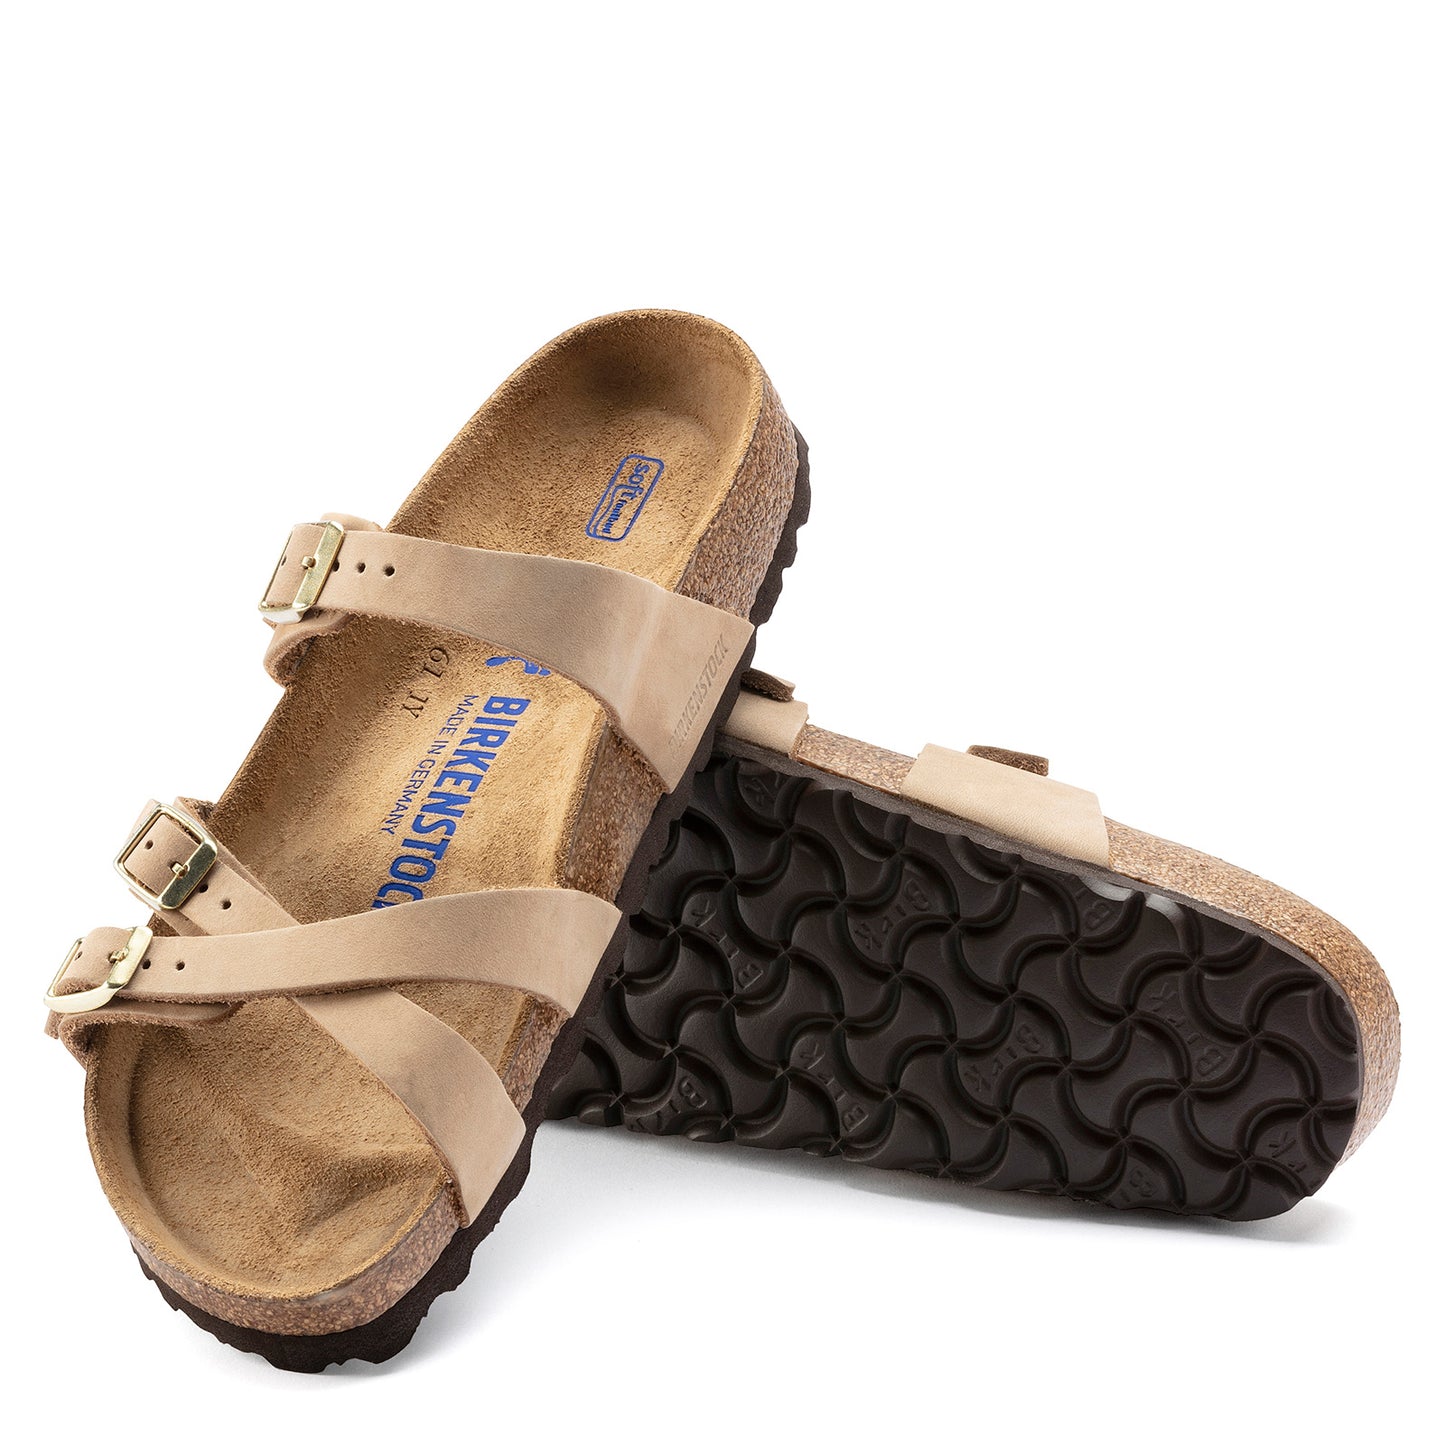 Peltz Shoes  Women's Birkenstock Franca Soft Footbed Sandal - Regular Width SAND 1022 956 R